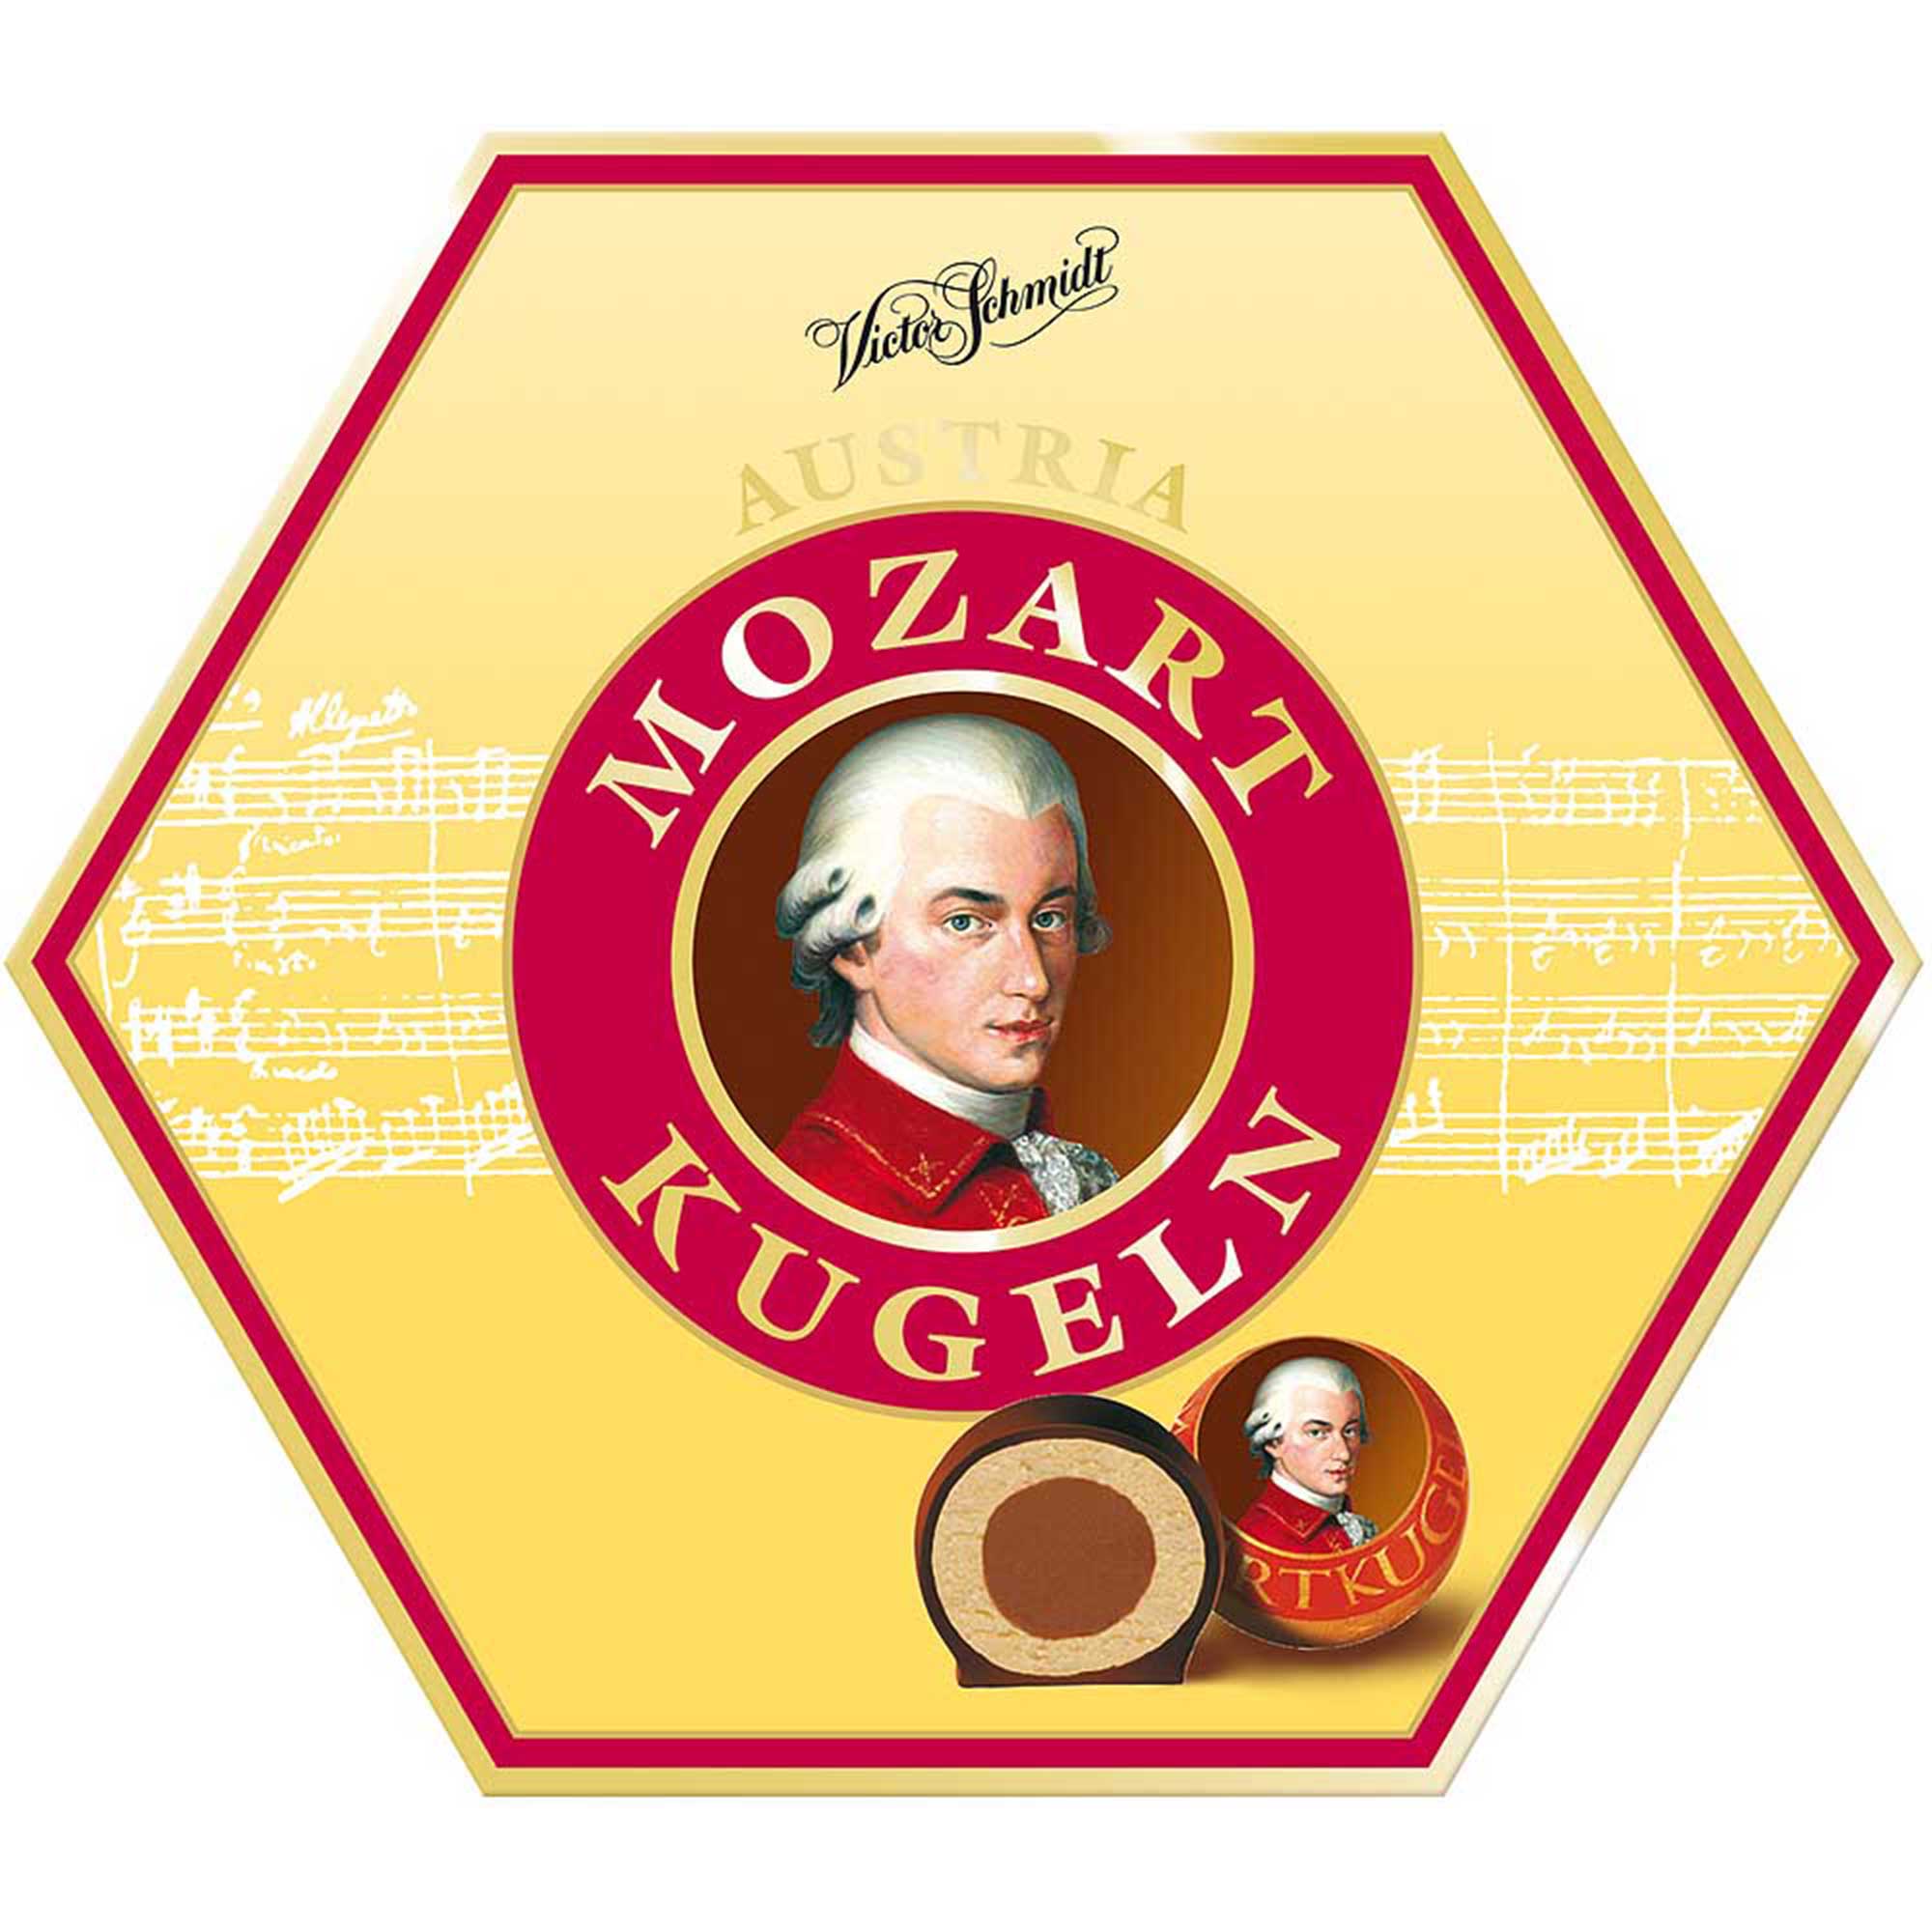 Victor Schmidt Austria Mozart balls sachet 9 pcs - 148,5g- order online now